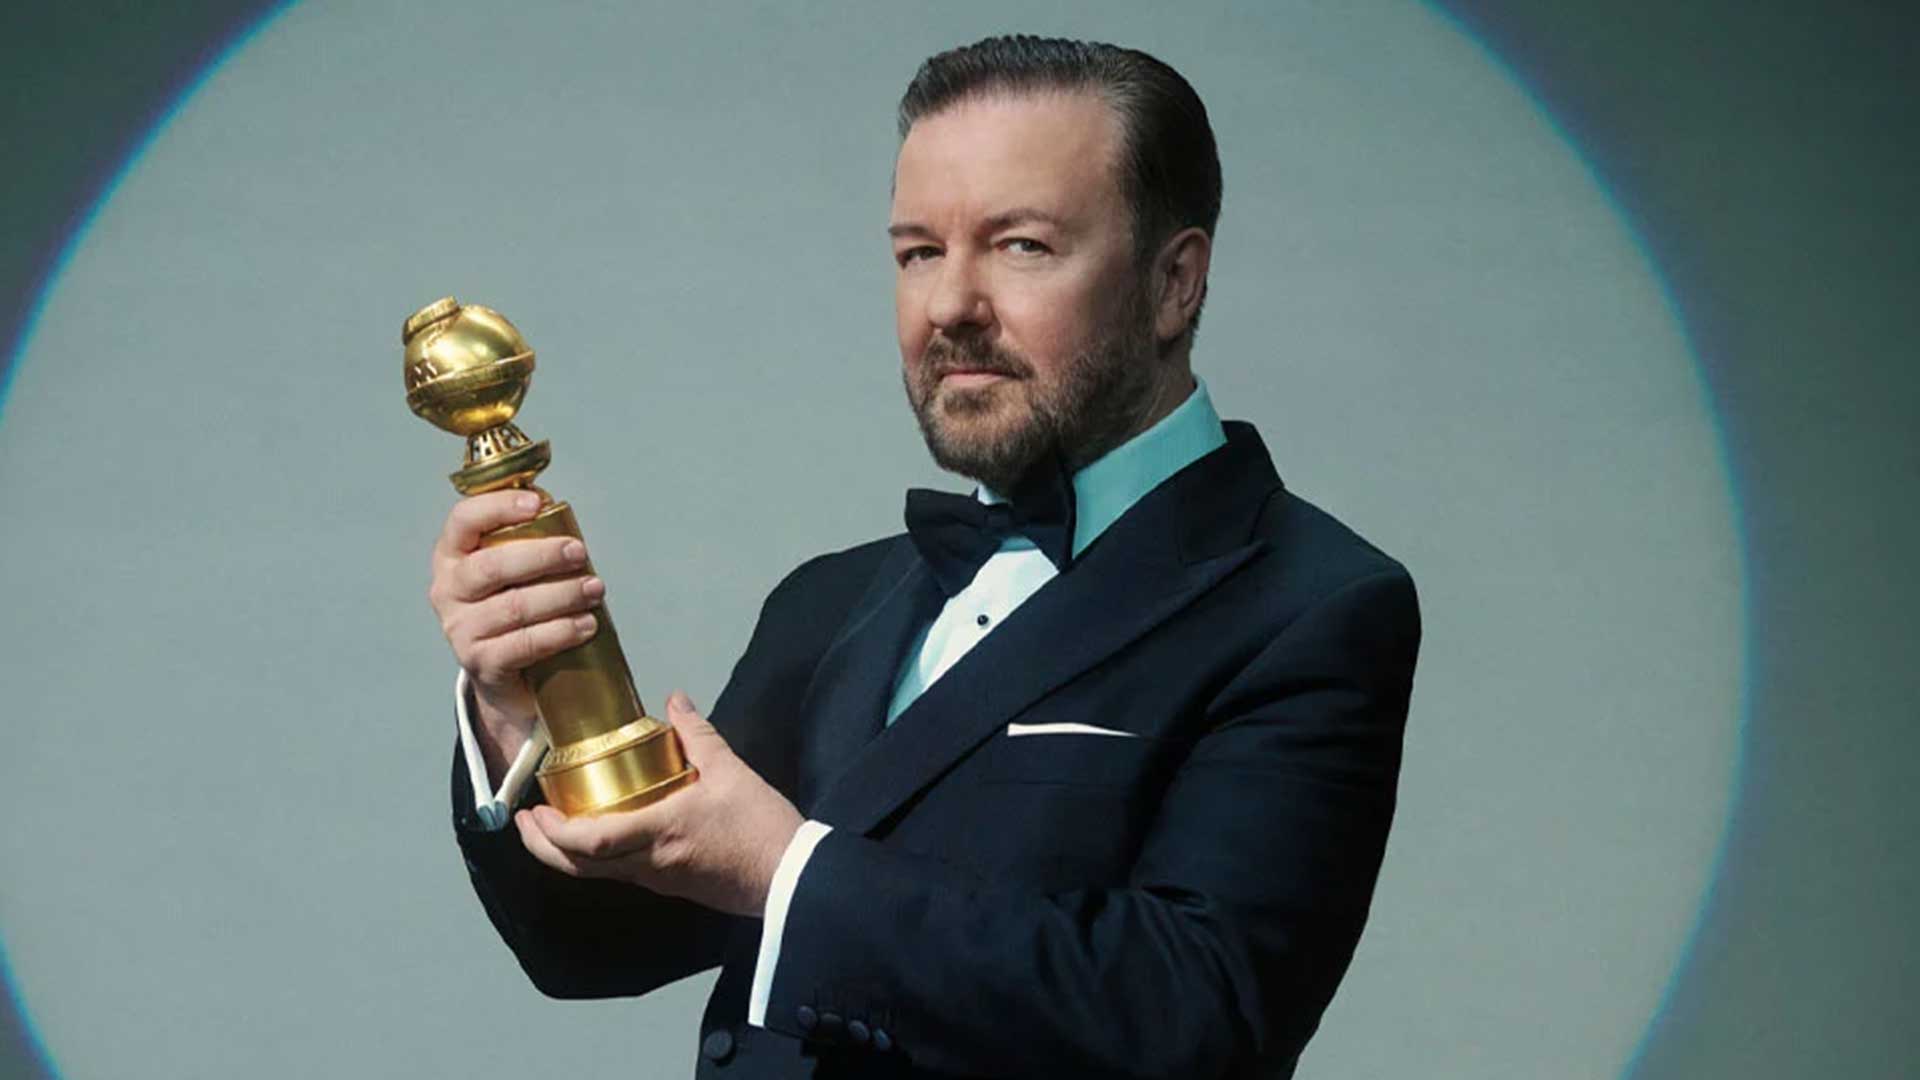 Golden Globe Awards Trivia